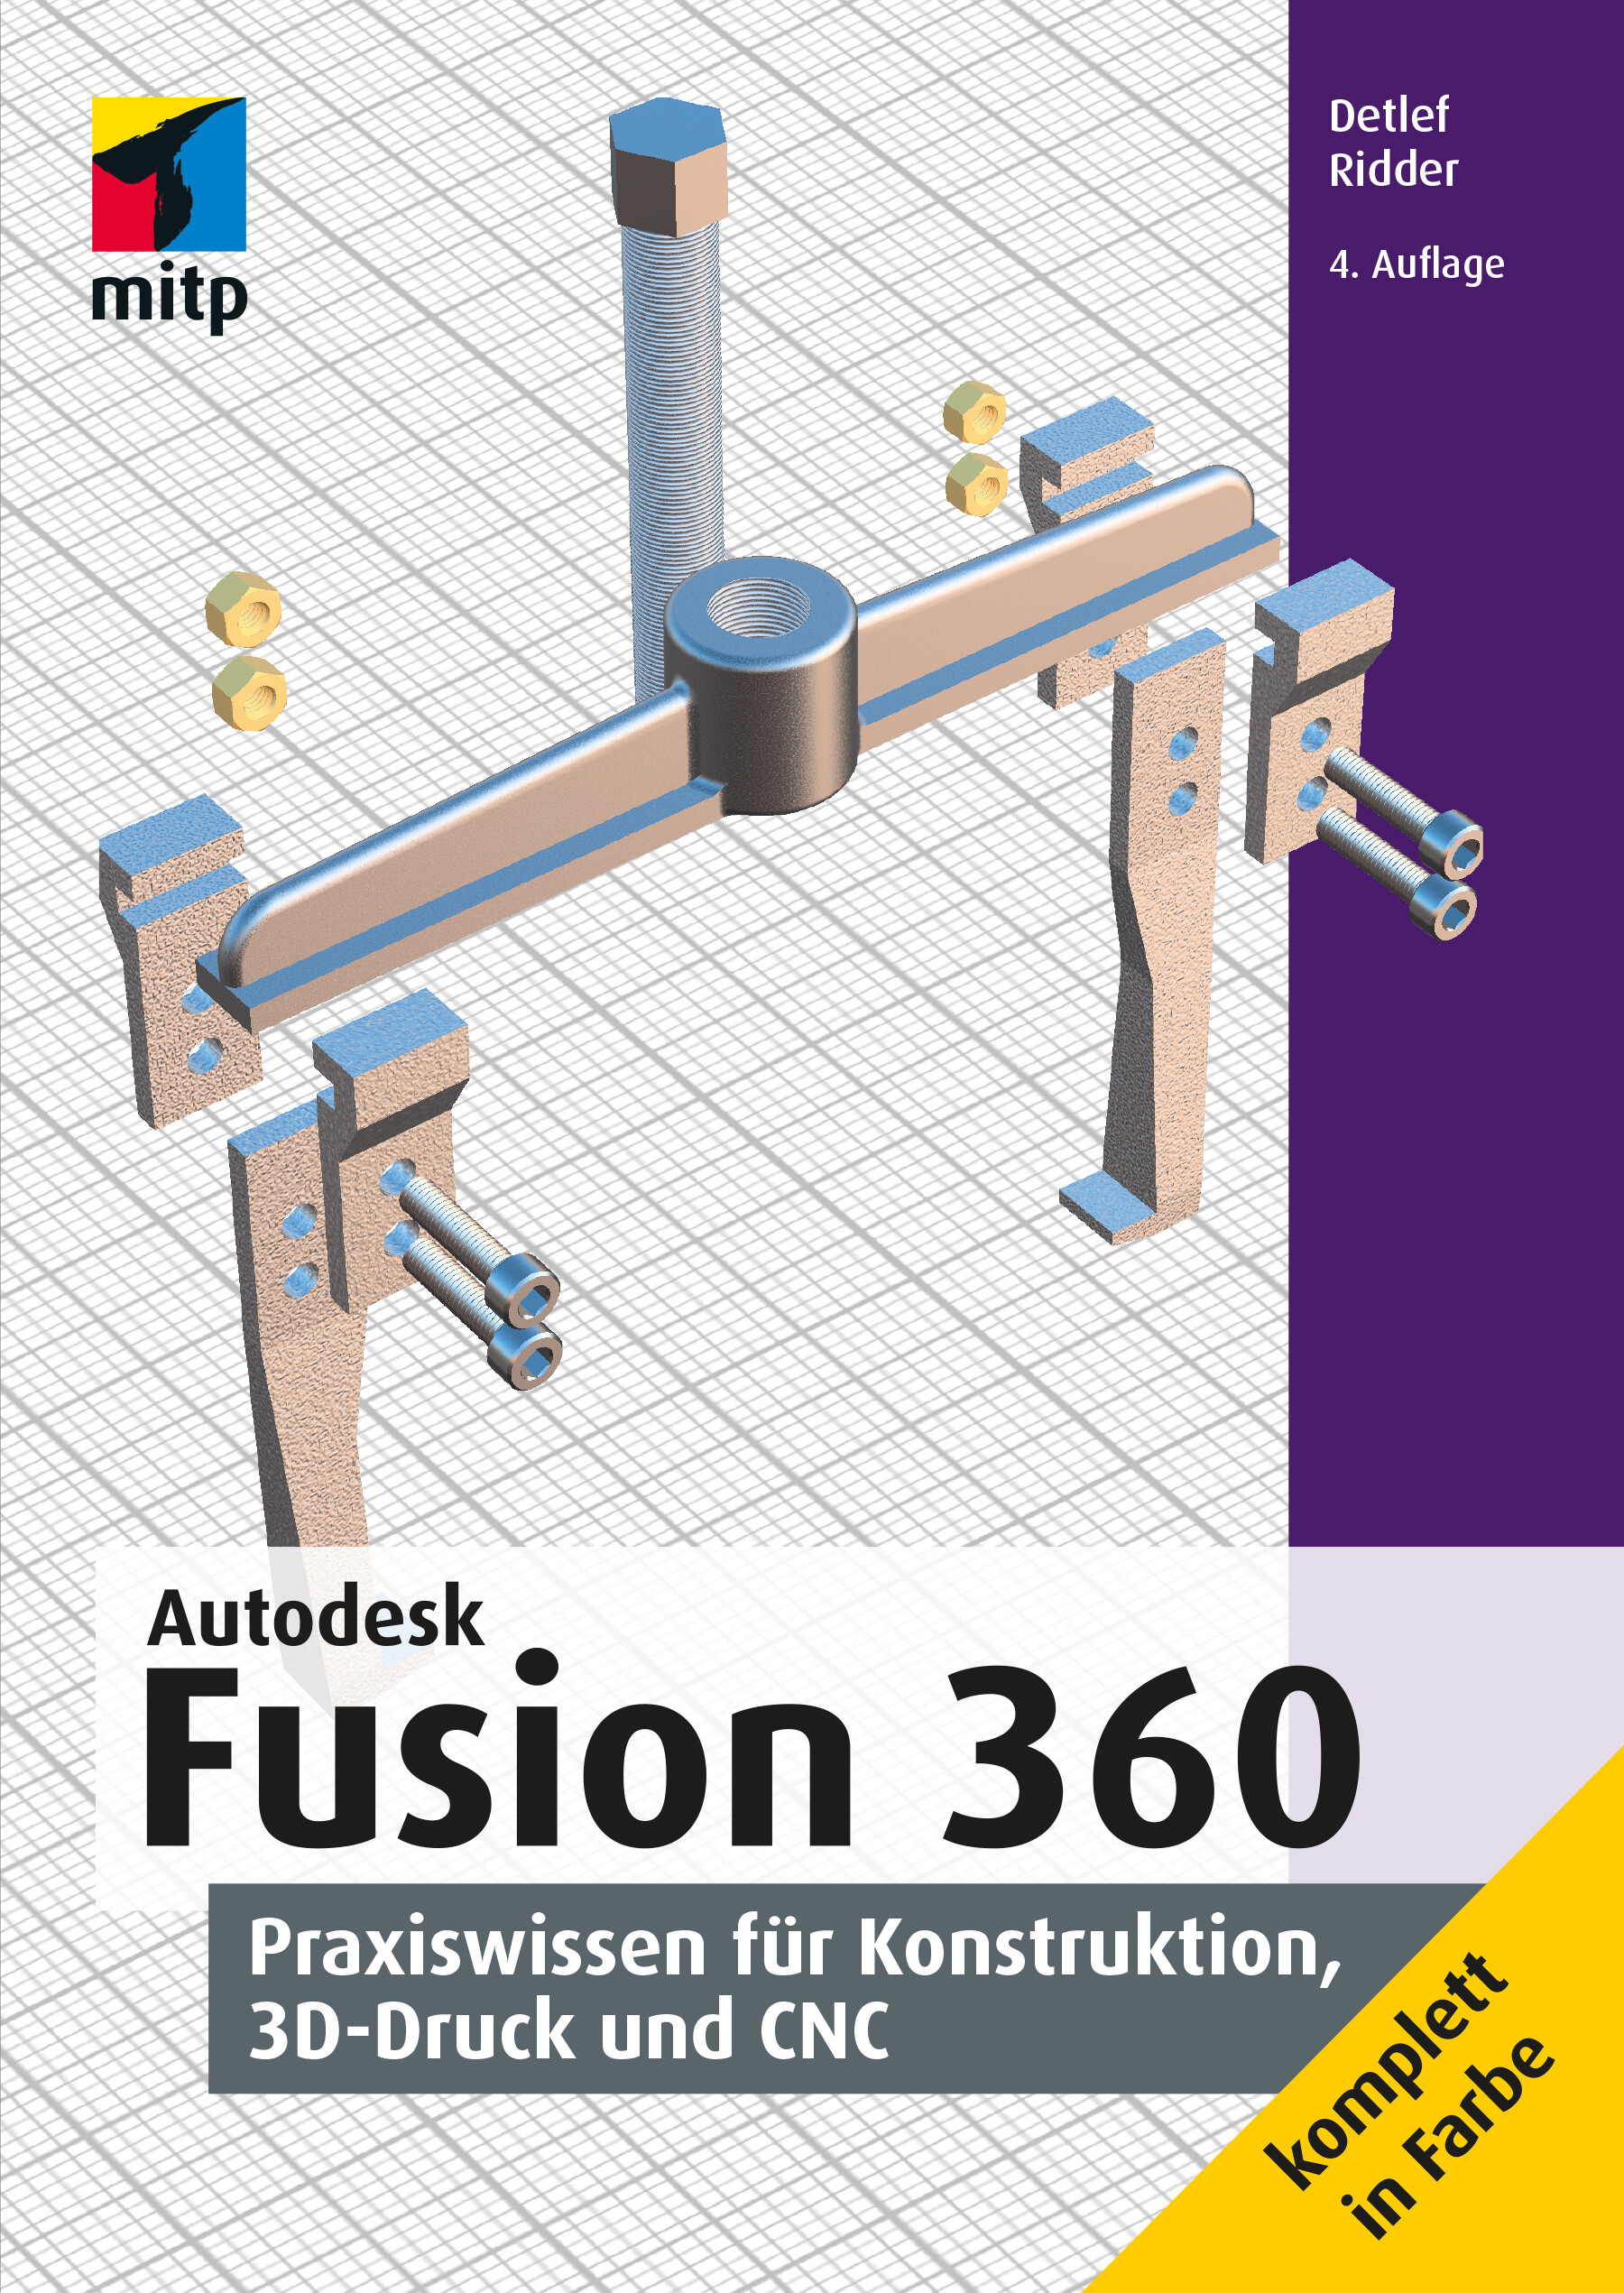 Autodesk Fusion 360 (4. Auflage)